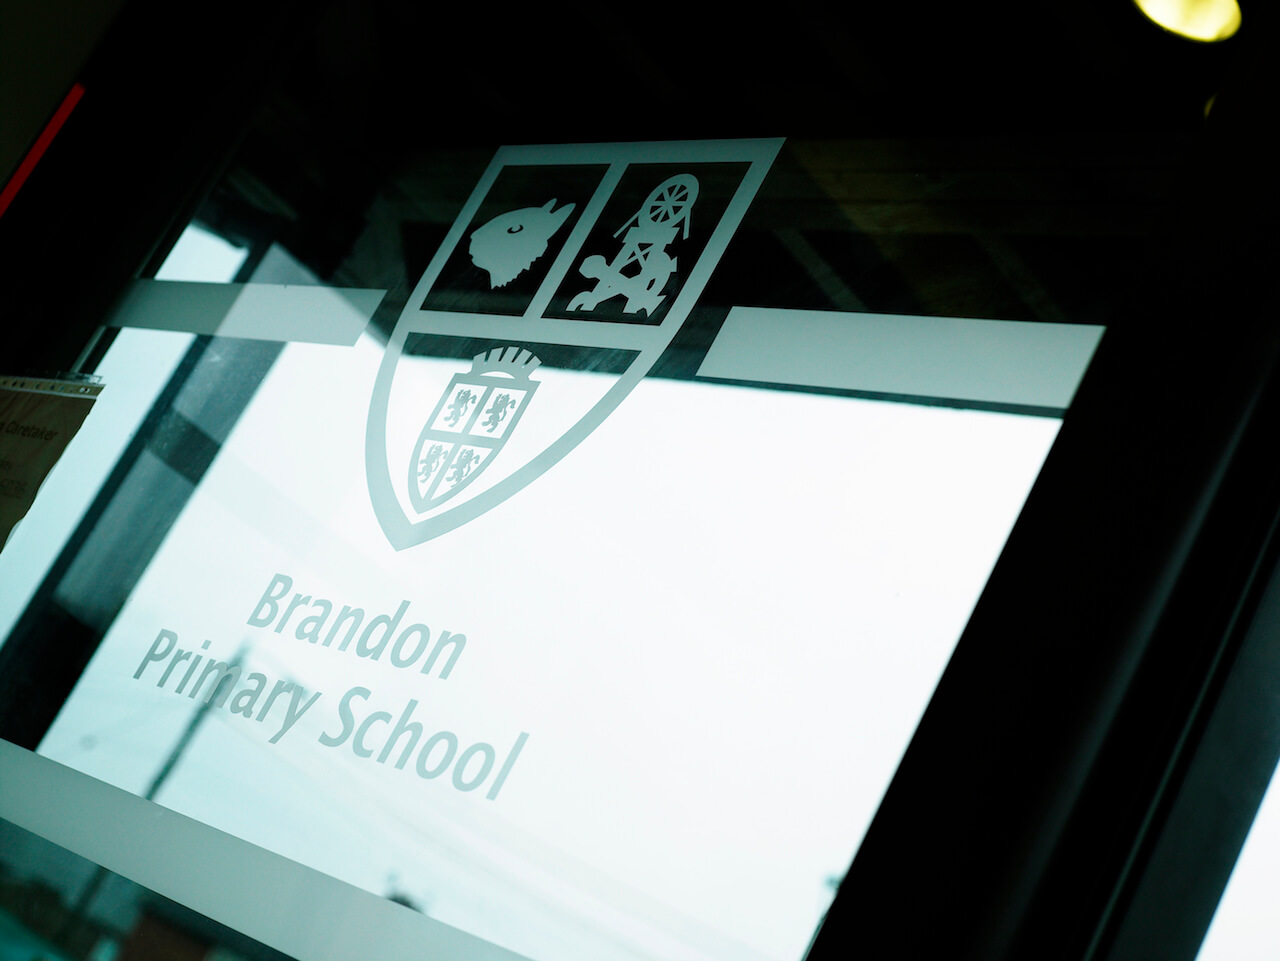 A window manifestation of Brandon Primary School's logo